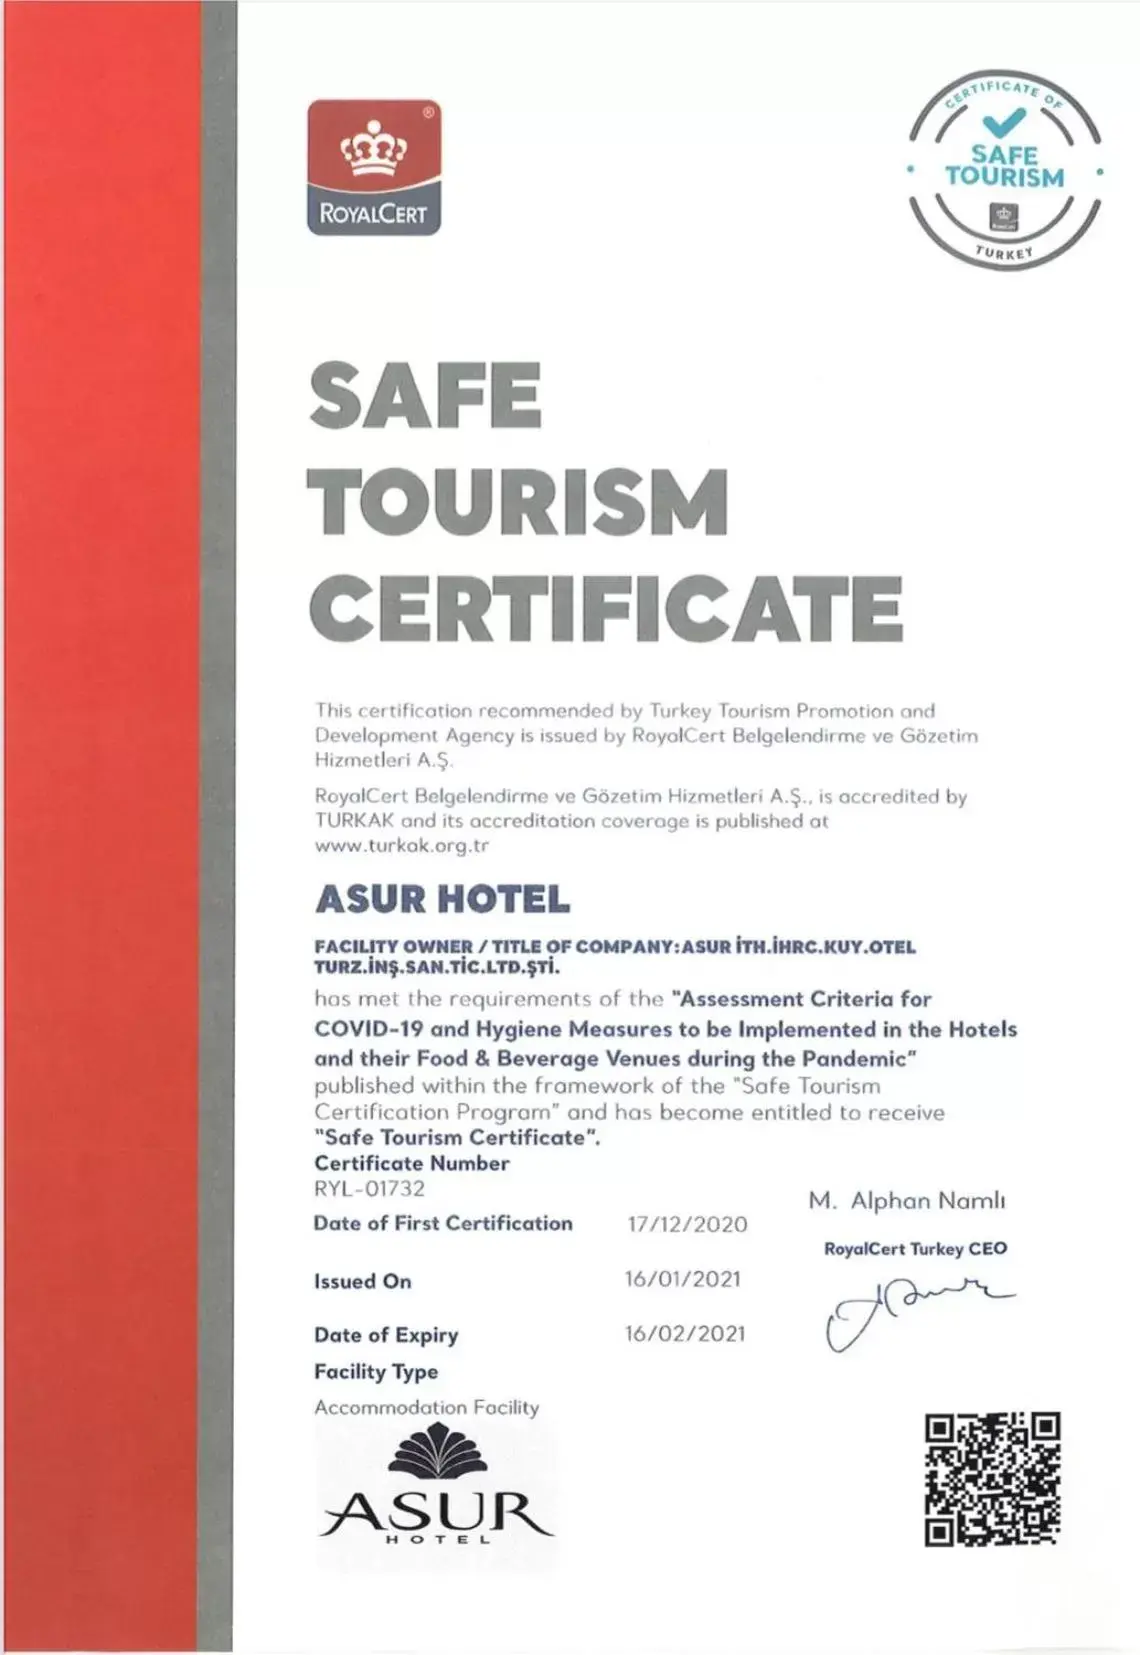 Logo/Certificate/Sign in Asur Hotel